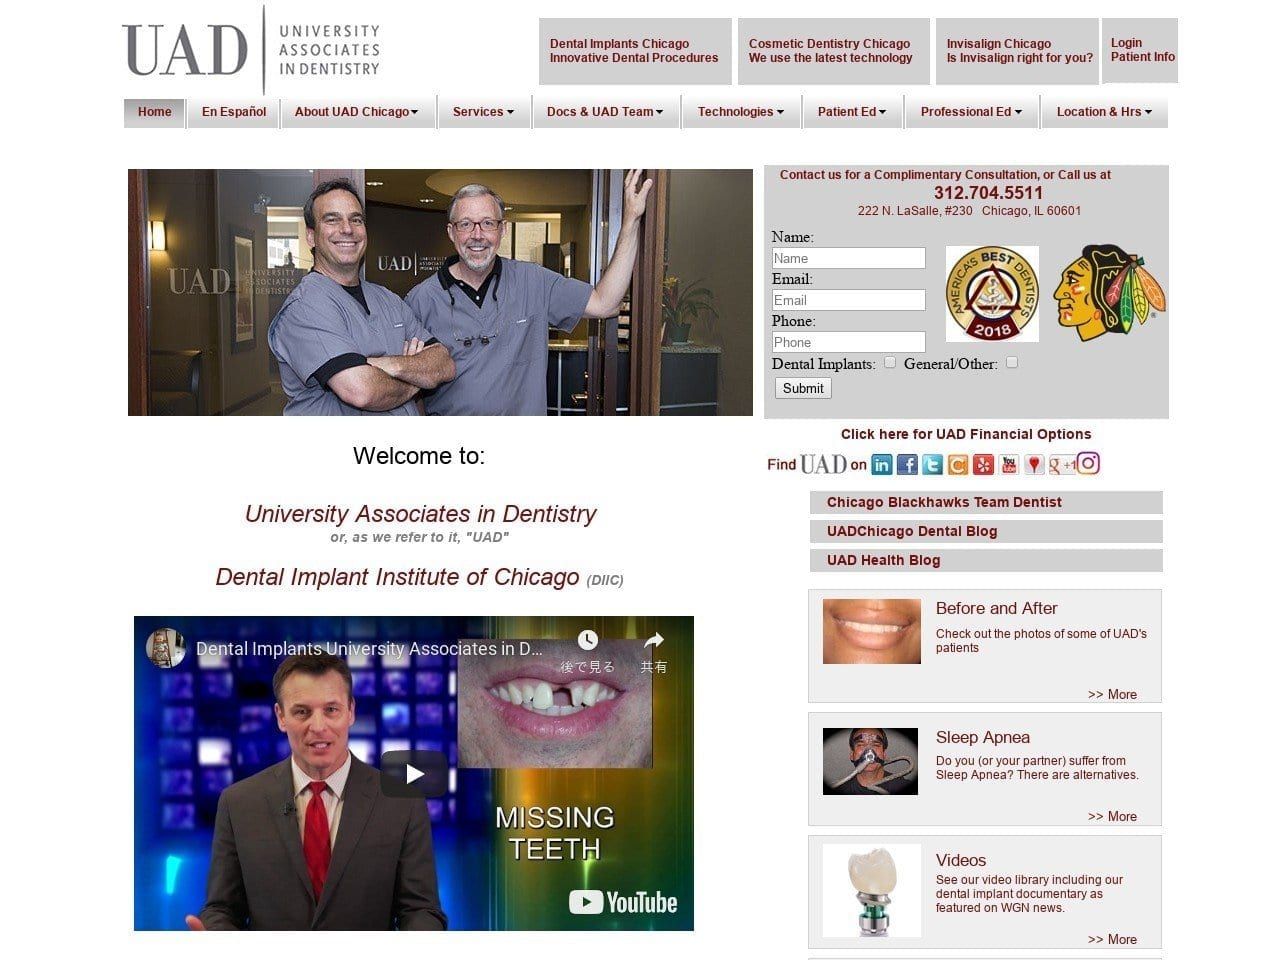 University Associates In Dentistry Website Screenshot from uadchicago.com